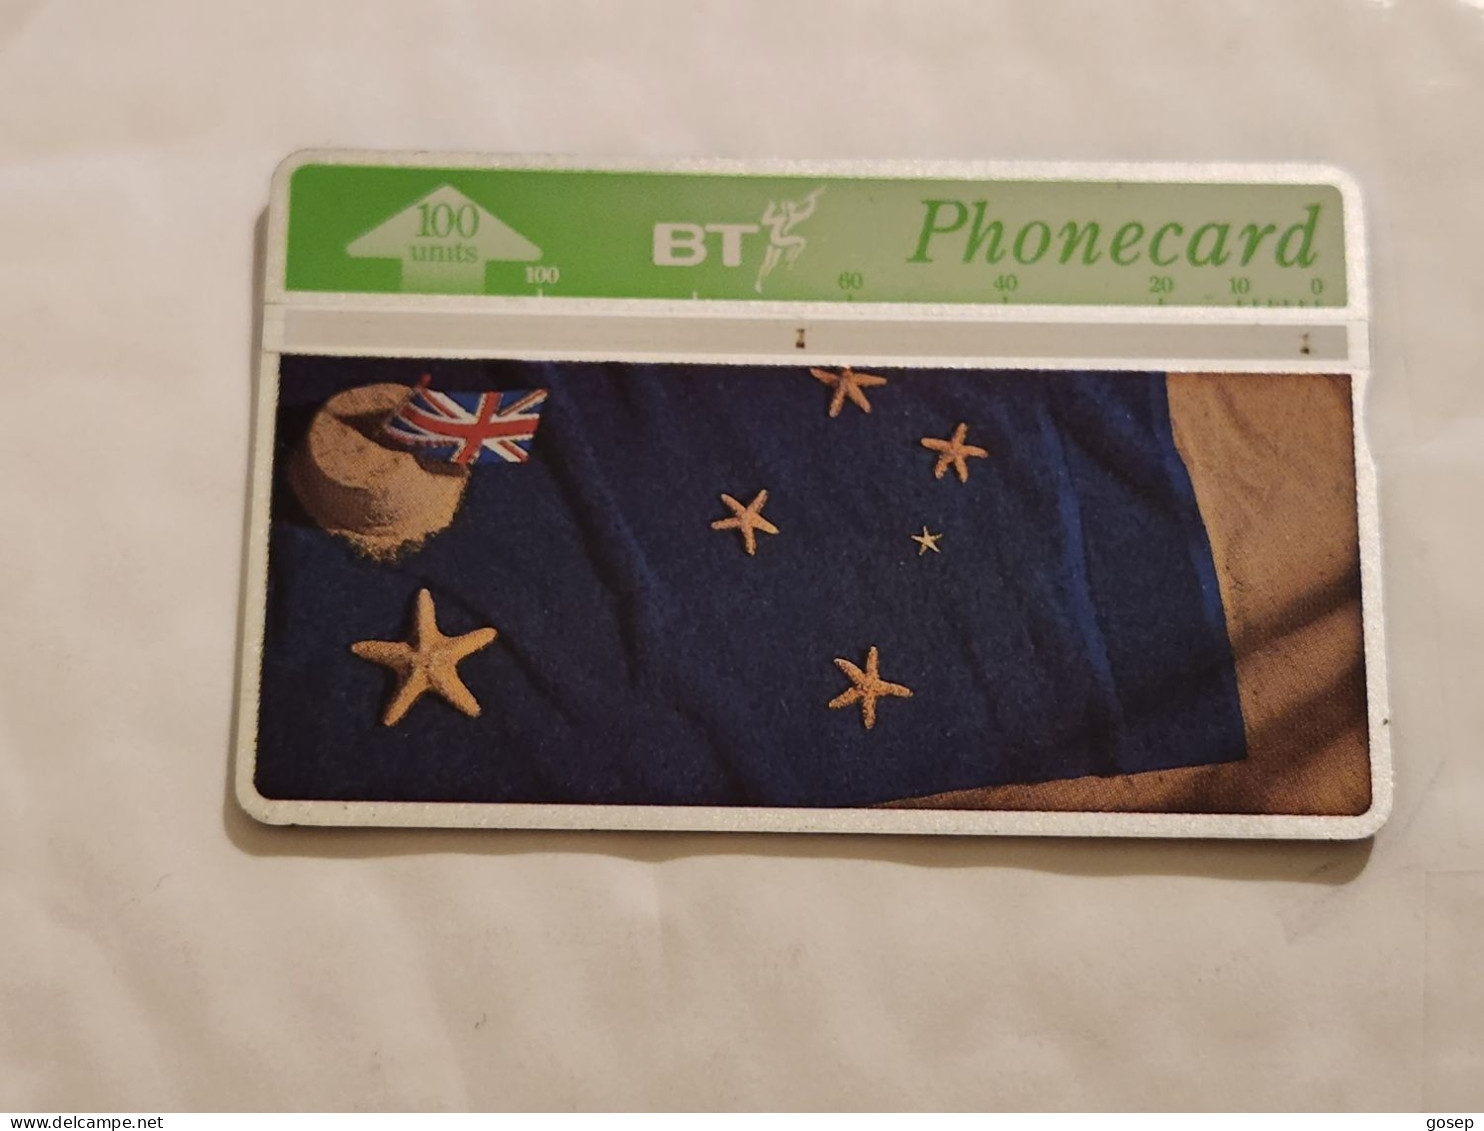 United Kingdom(BTC158)Flying The Flag 4(AUSTRALIA)(1045)(100units)(526H33634)price Cataloge6.00£+1card Prepiad Free - BT Souvenir